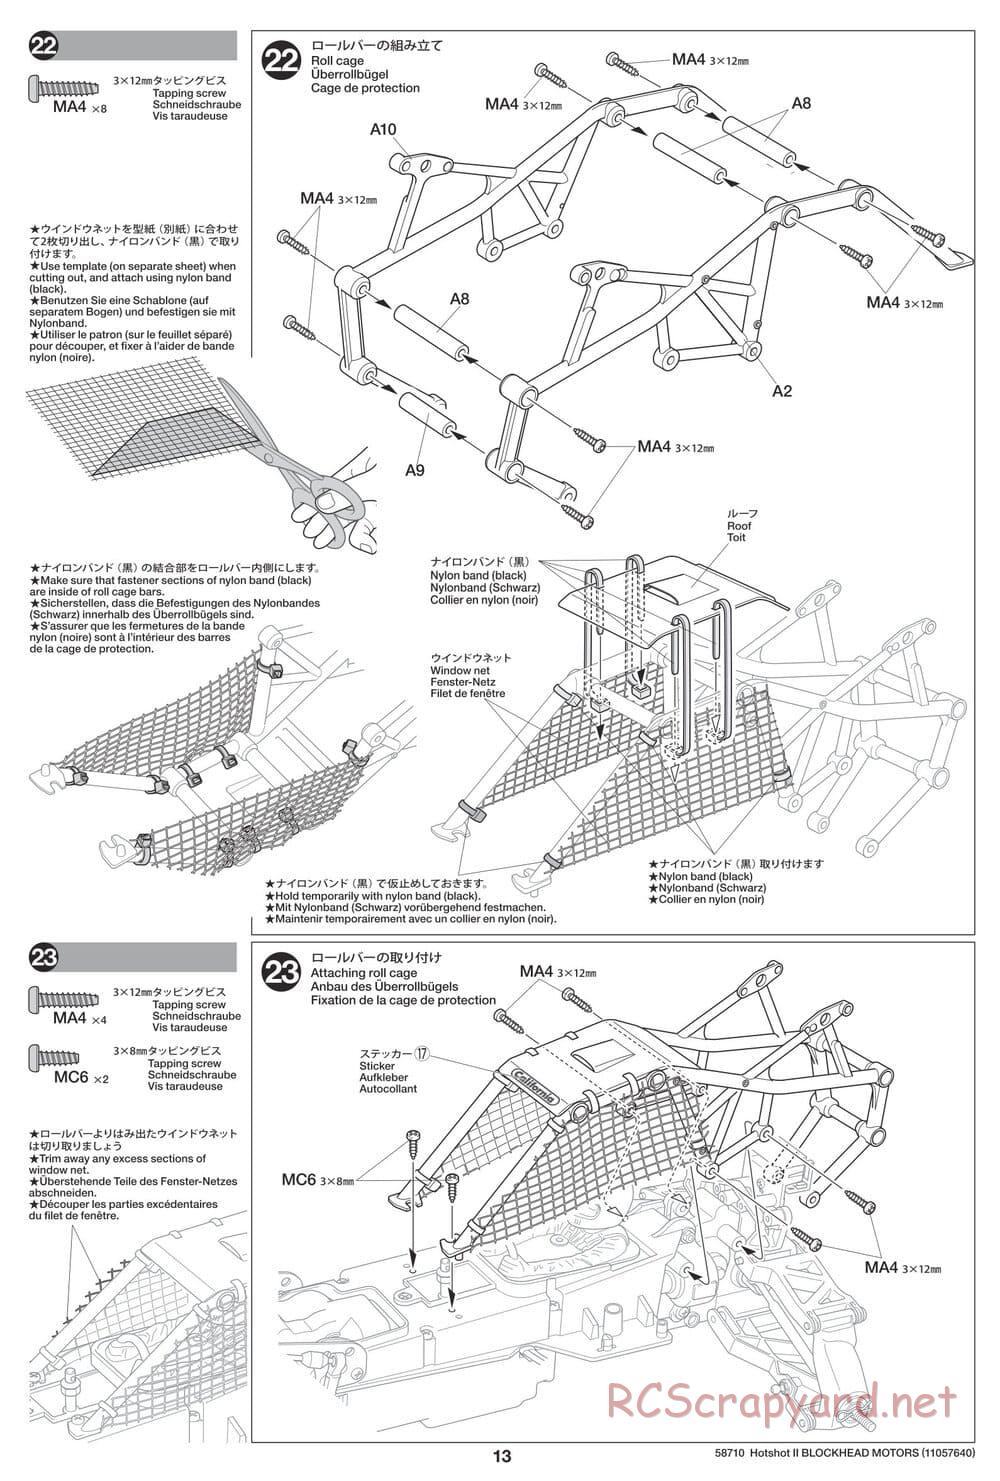 Tamiya - Hotshot II Blockhead Motors - HS Chassis - Manual - Page 13